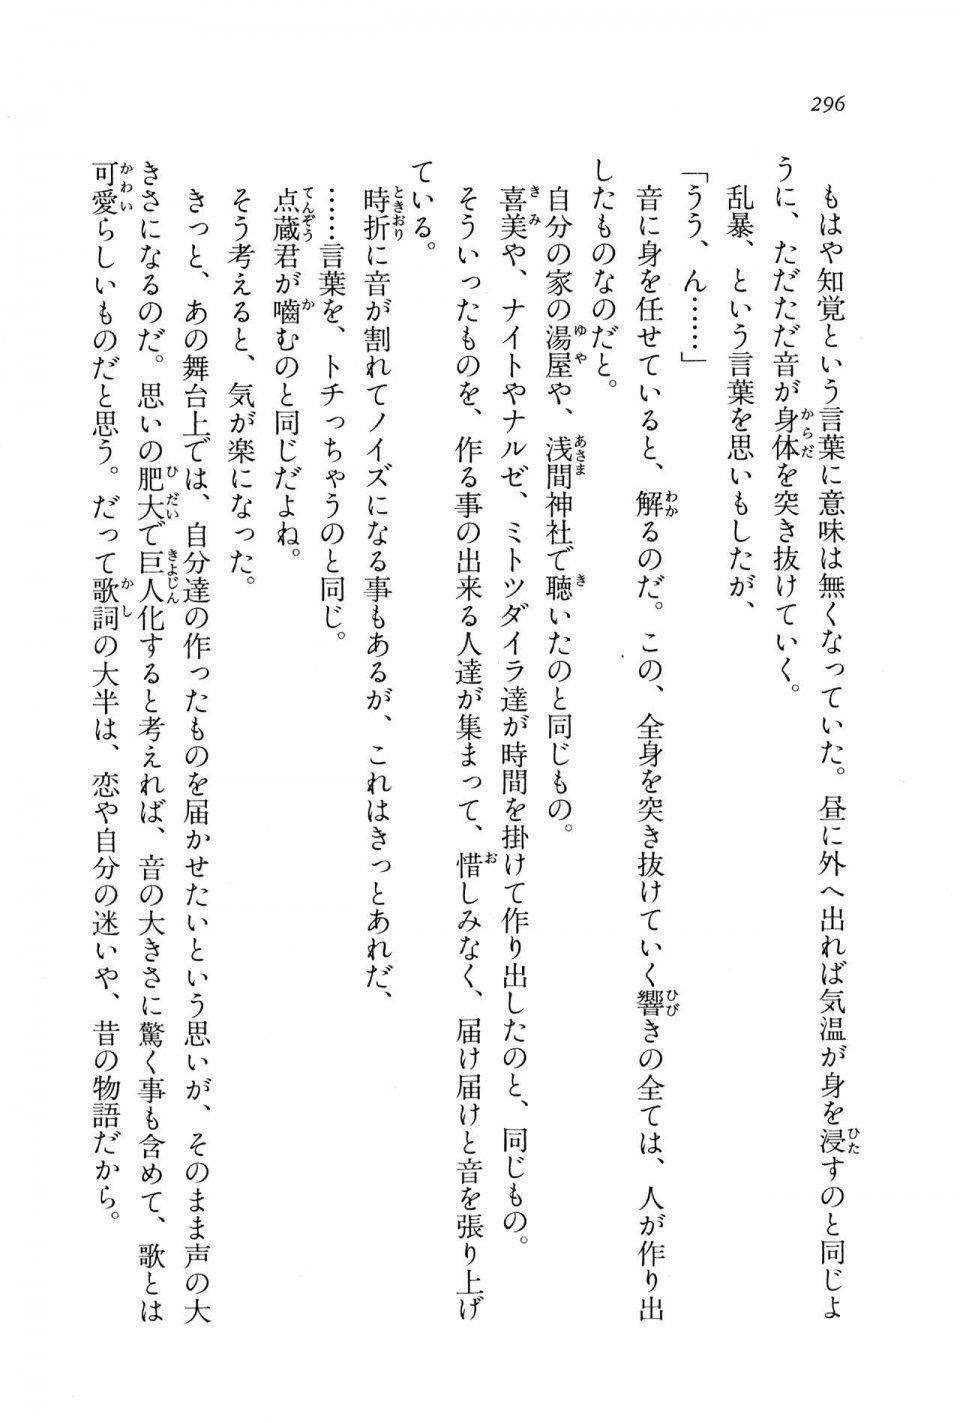 Kyoukai Senjou no Horizon BD Special Mininovel Vol 8(4B) - Photo #300